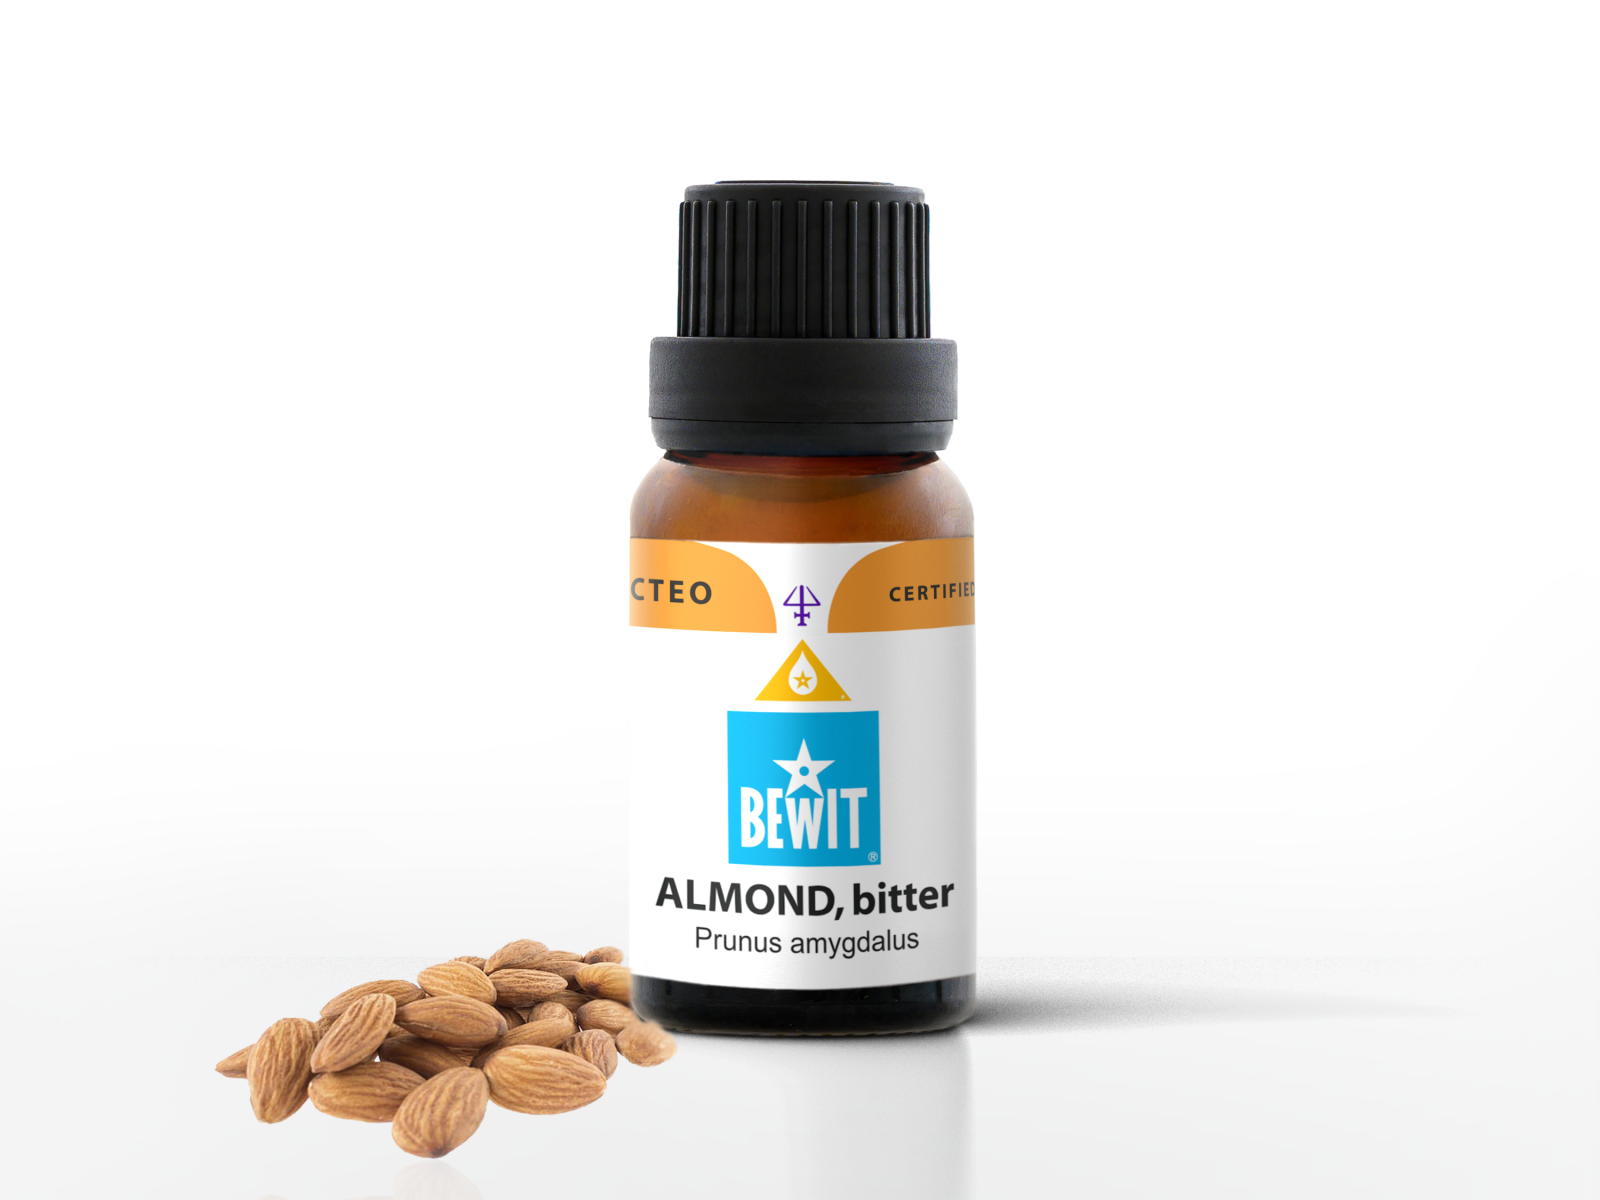 Almonds, bitter - 100% pure essential oil